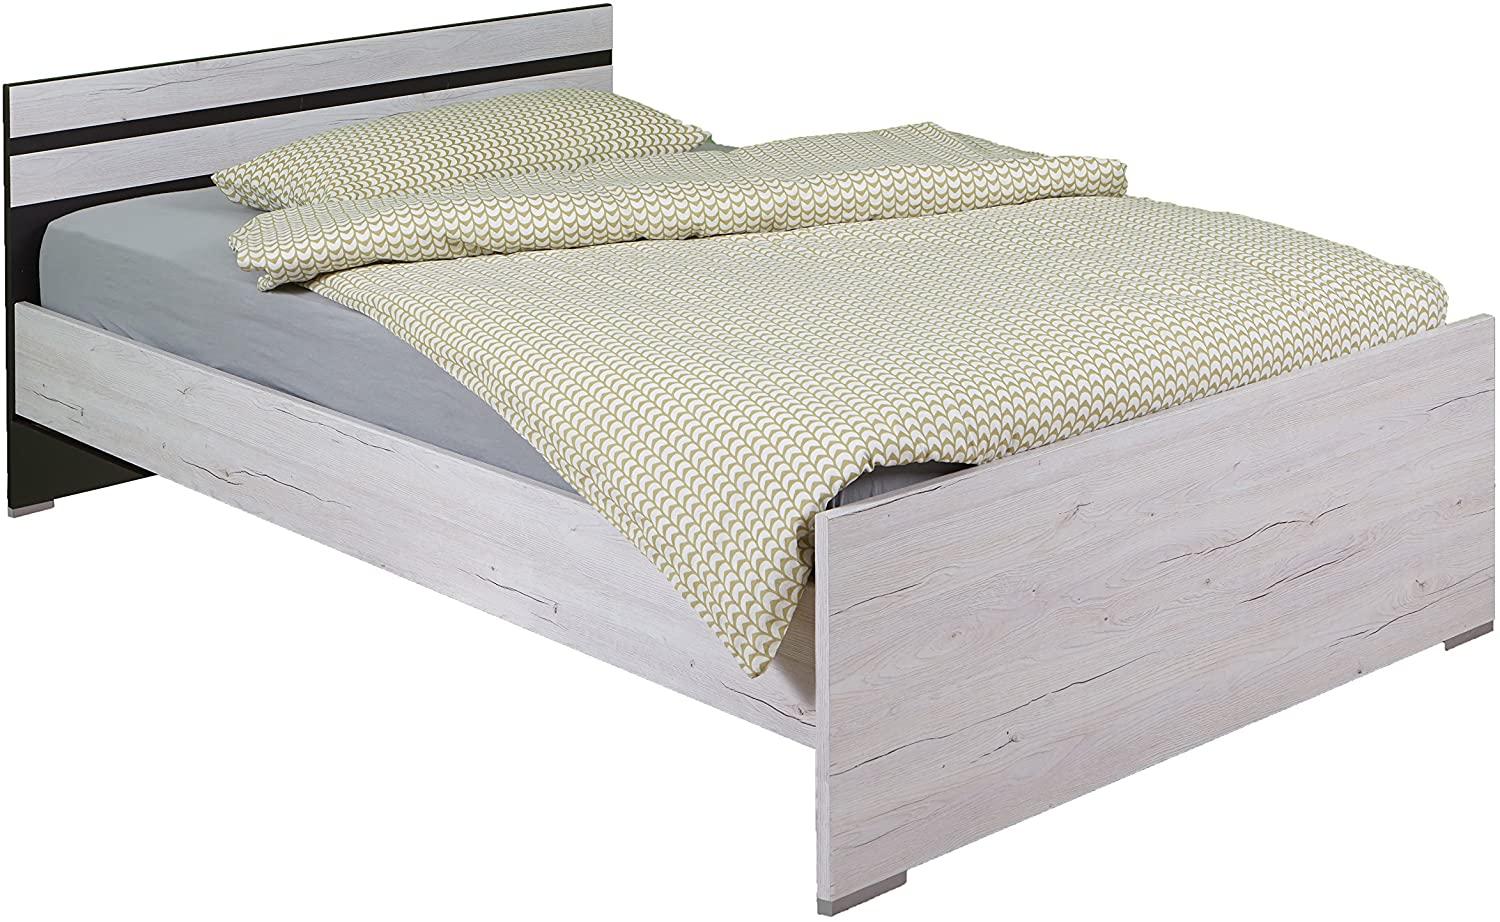 Wimex 'Cariba' Bett/ Doppelbett, weißeiche/ lavafarbig, 140 x 200 cm Bild 1